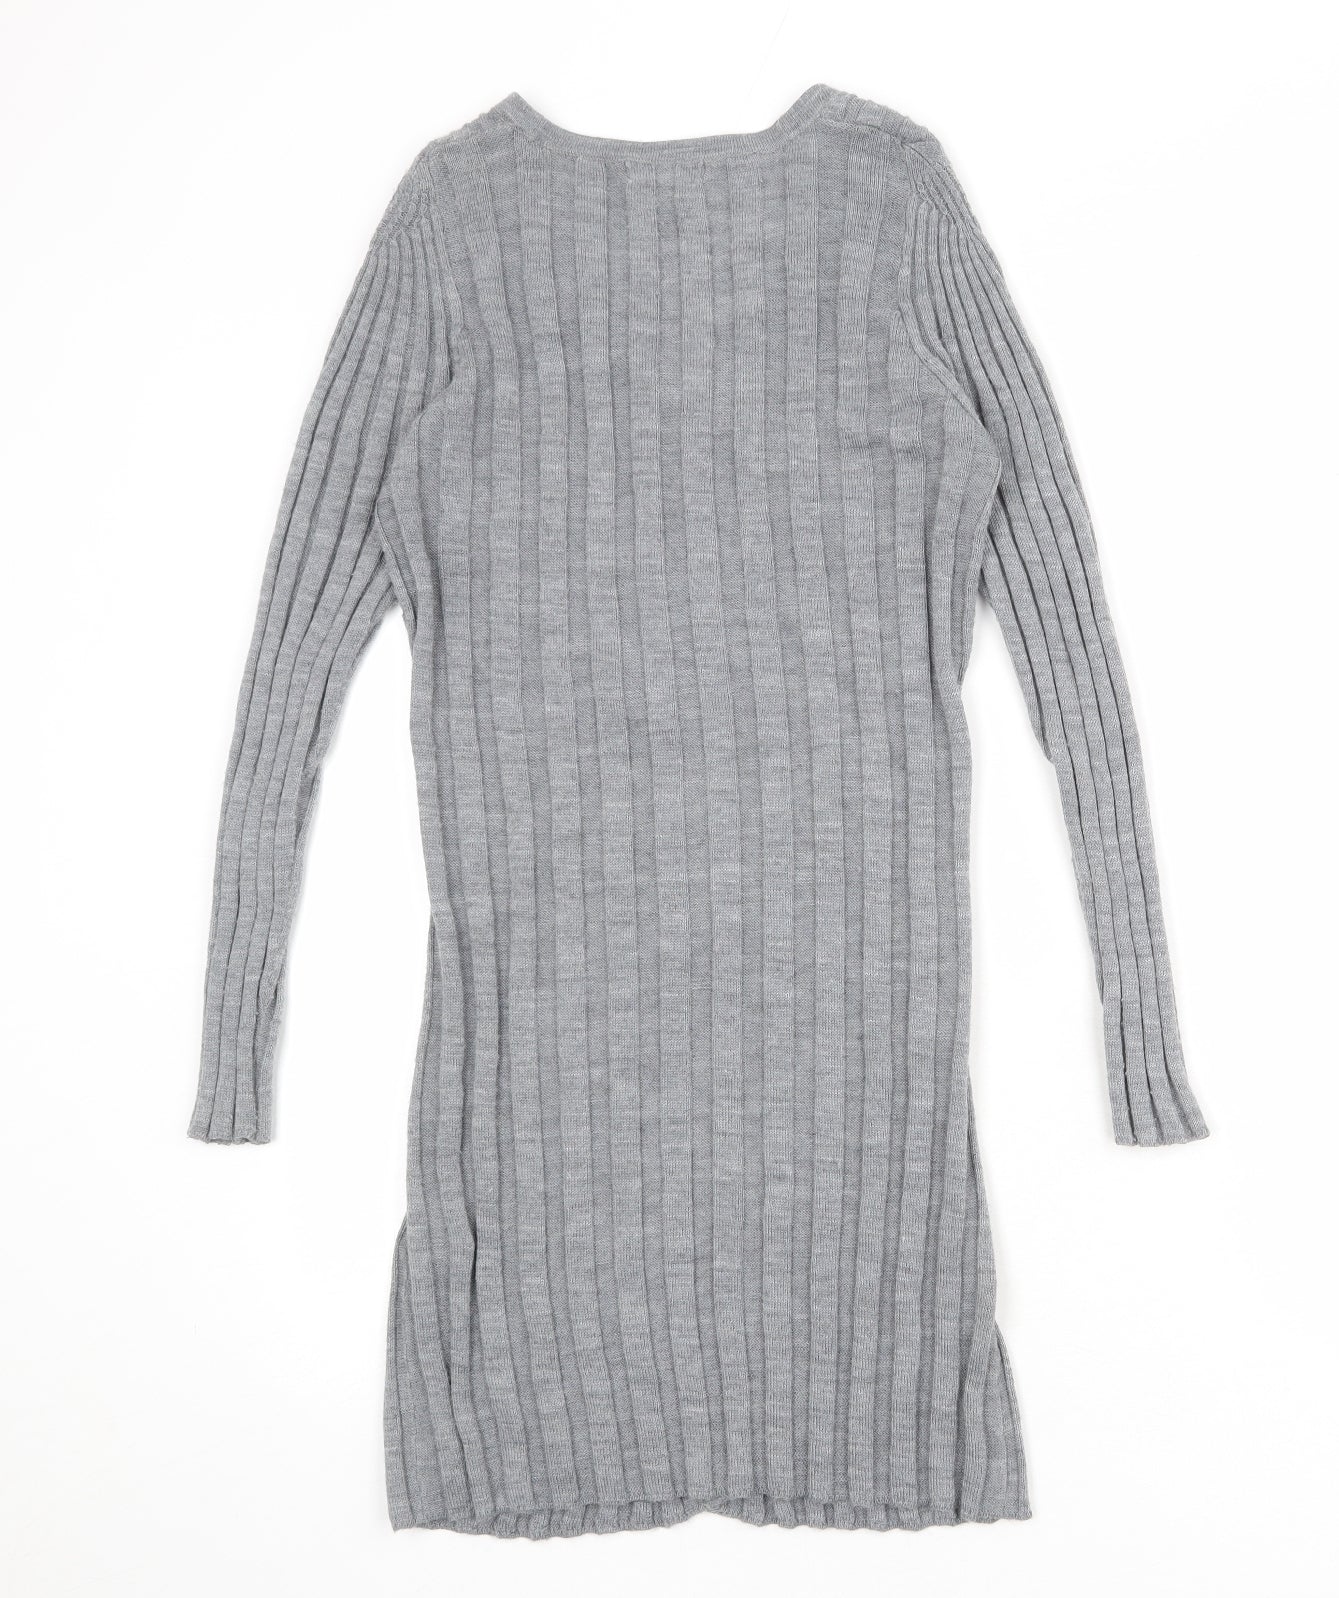 Monsoon Womens Grey V-Neck Wool Cardigan Jumper Size S